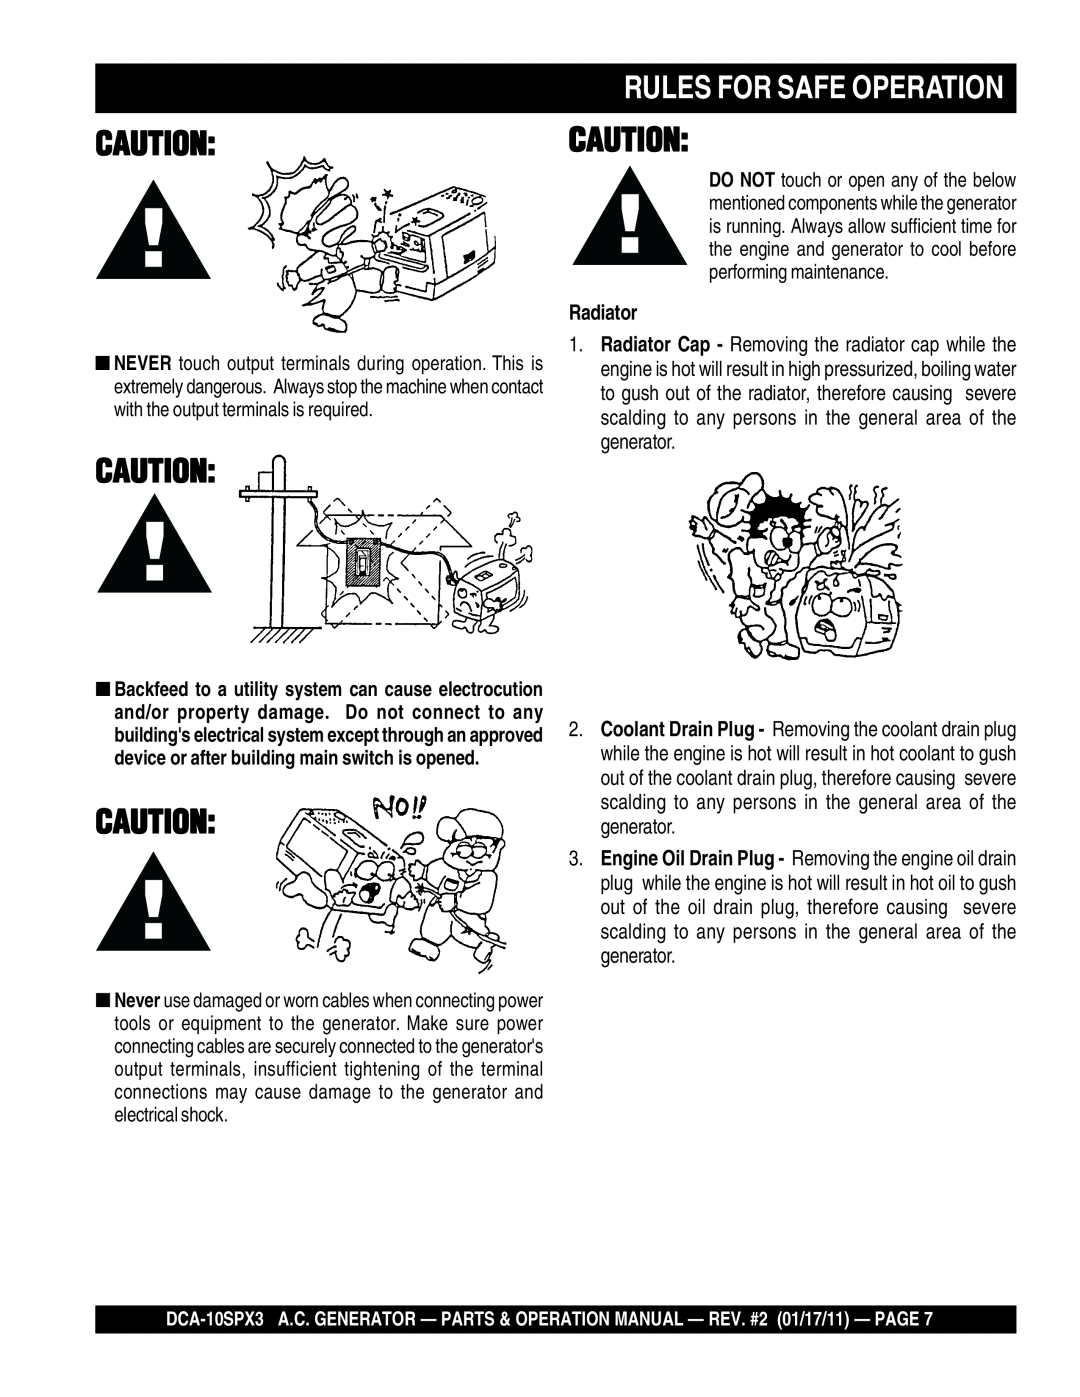 Multiquip DCA10SPX3 manual Cautioncaution, Rules For Safe Operation, Radiator 